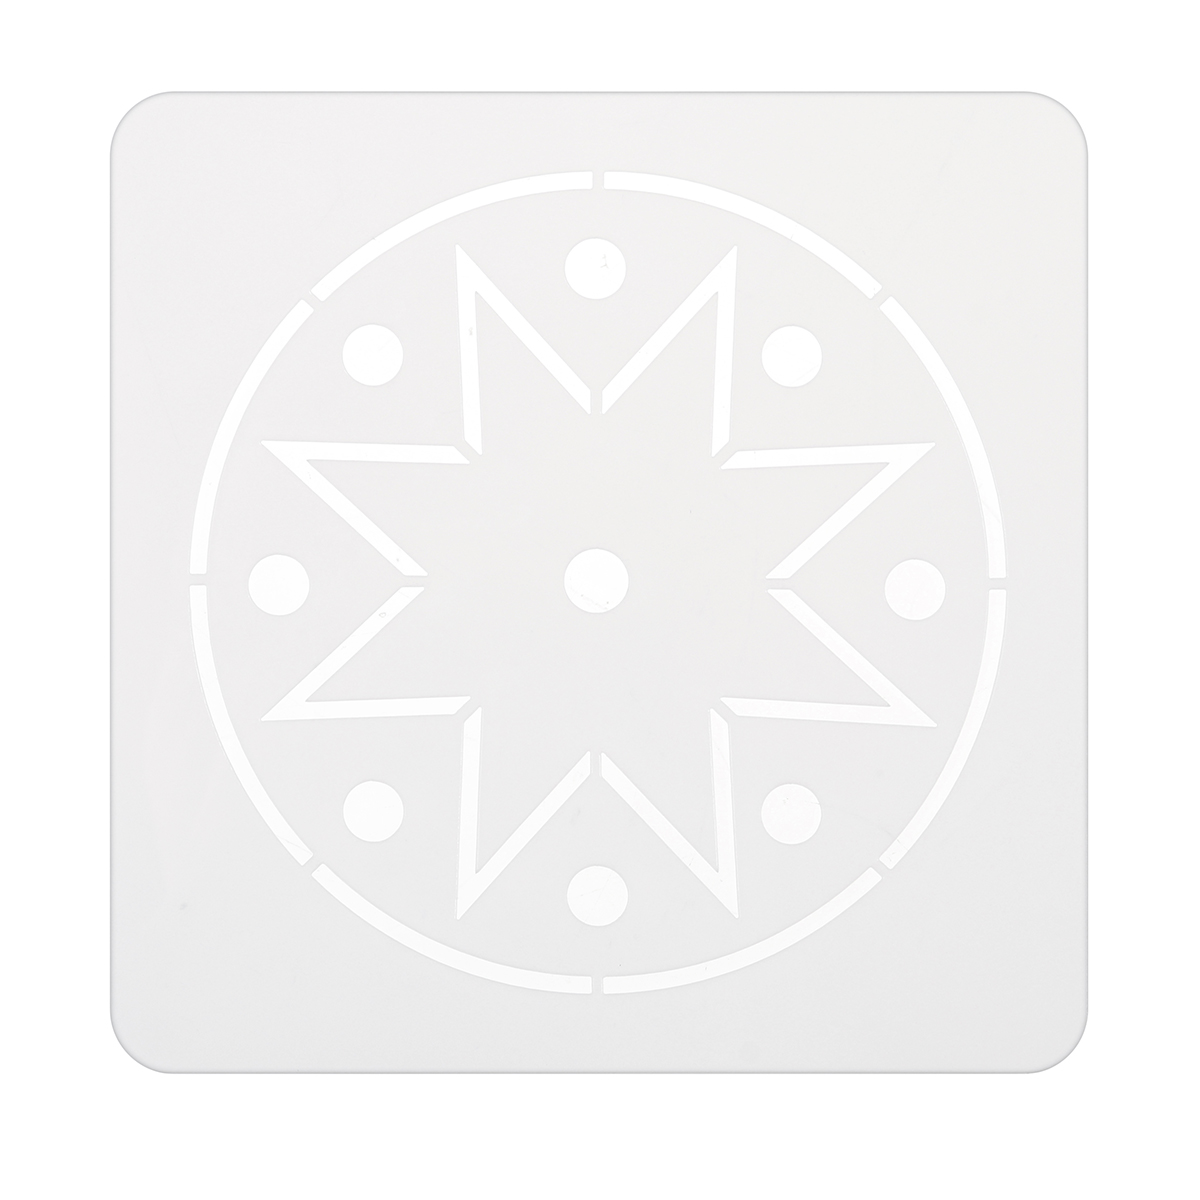 13x13cm-16Pcs-White-Plastic-Mandala-Paint-Tray-Openwork-Painting-Template-1708803-9